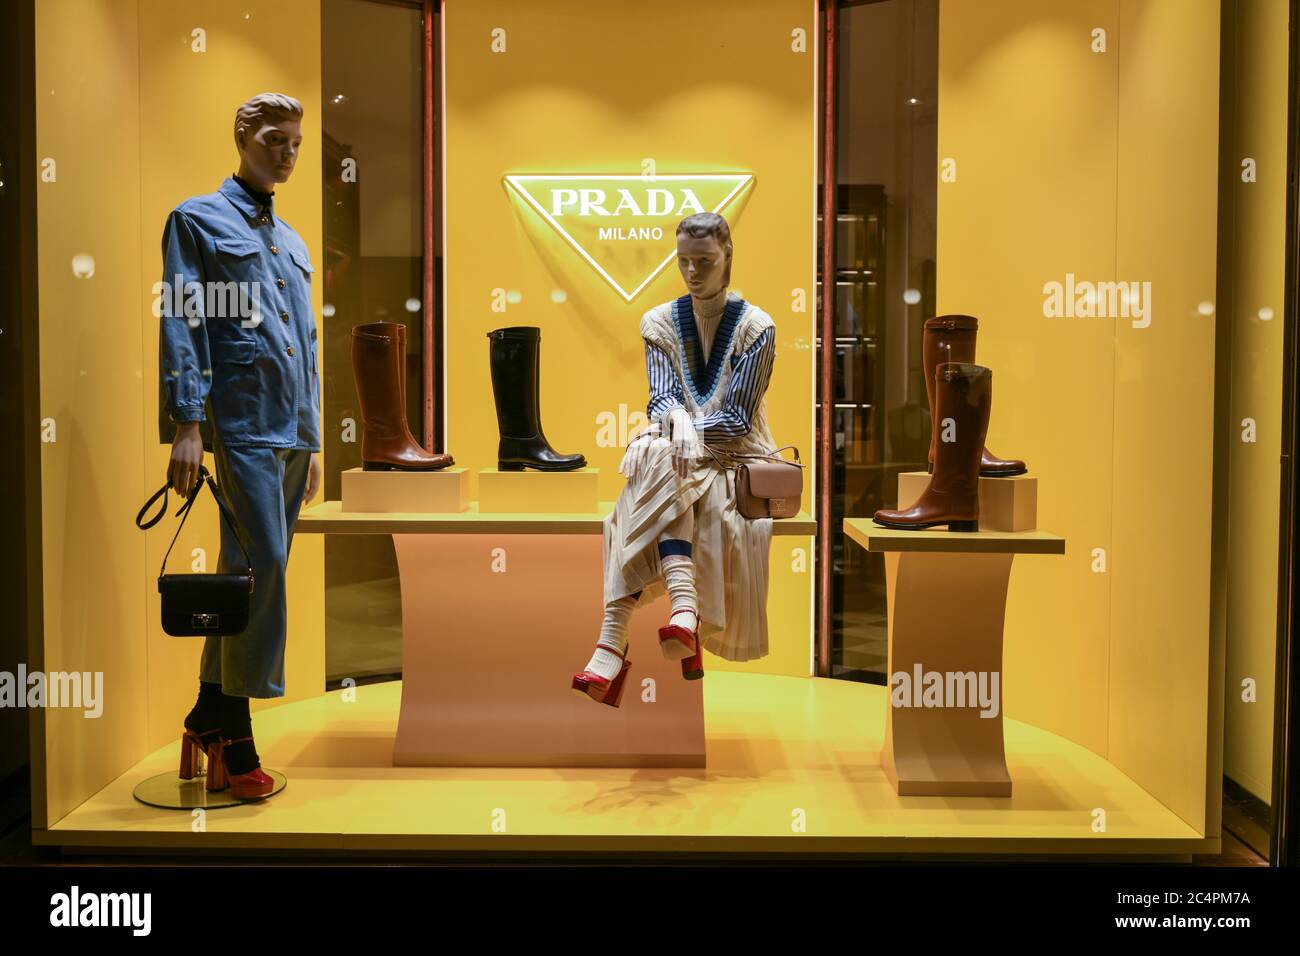 Milan, Italy - January 11, 2020: Prada clothing, boots, shoes and purses showcase Stock Photo